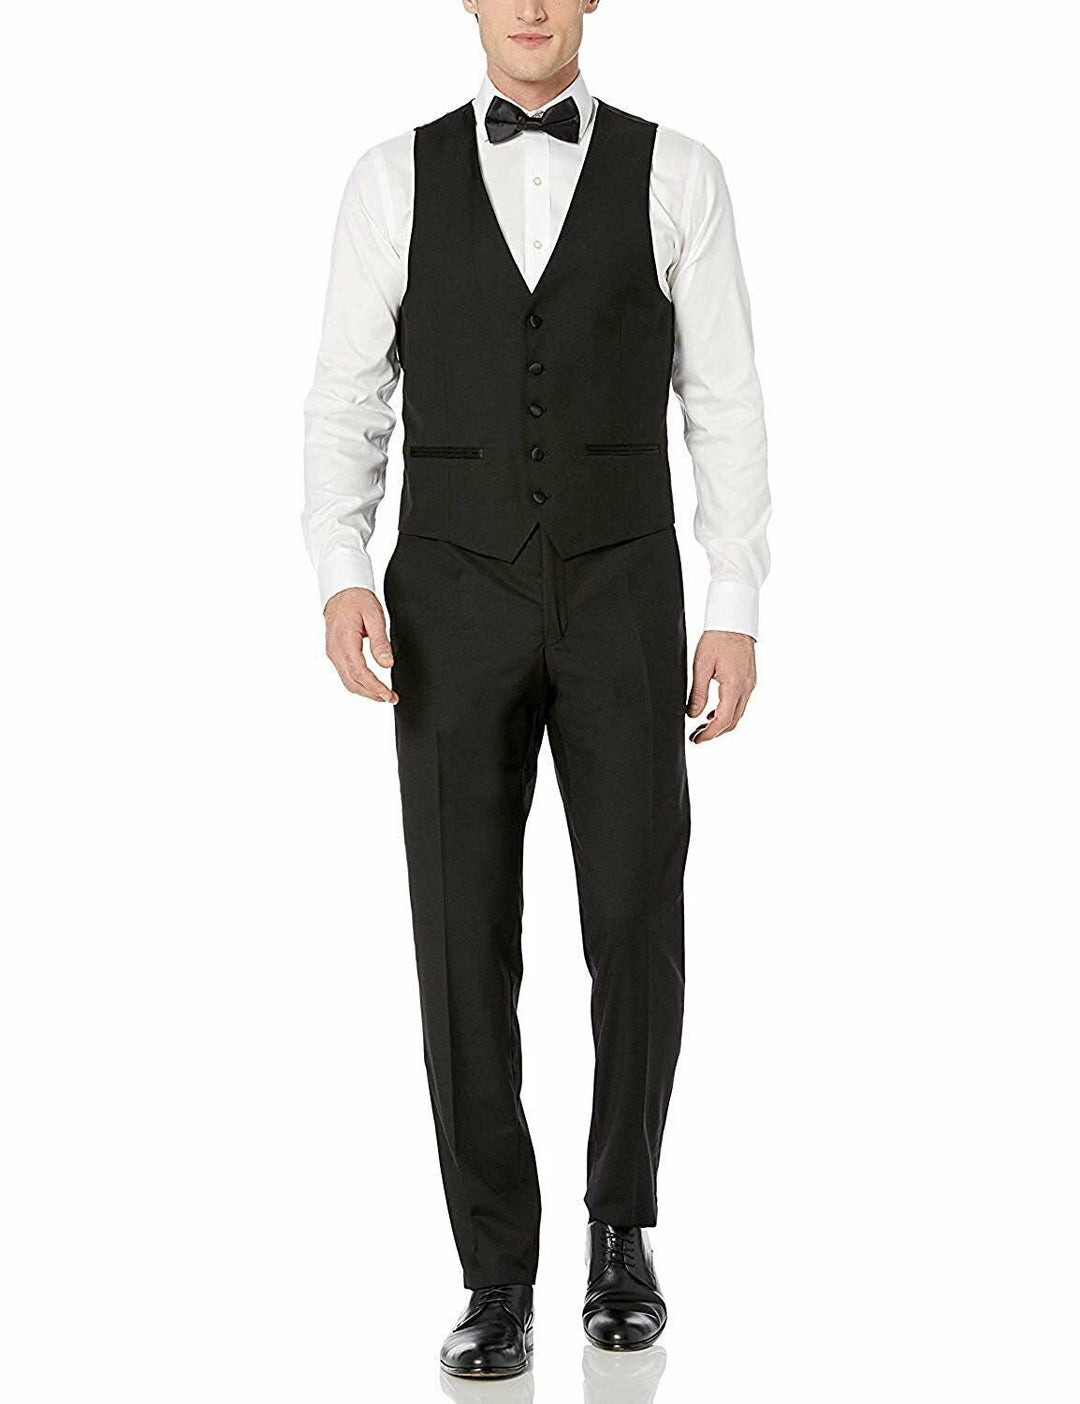 Adam Baker Men's 100% Wool Modern Fit Single Breasted Three Piece Shawl Collar Tuxedo - Black